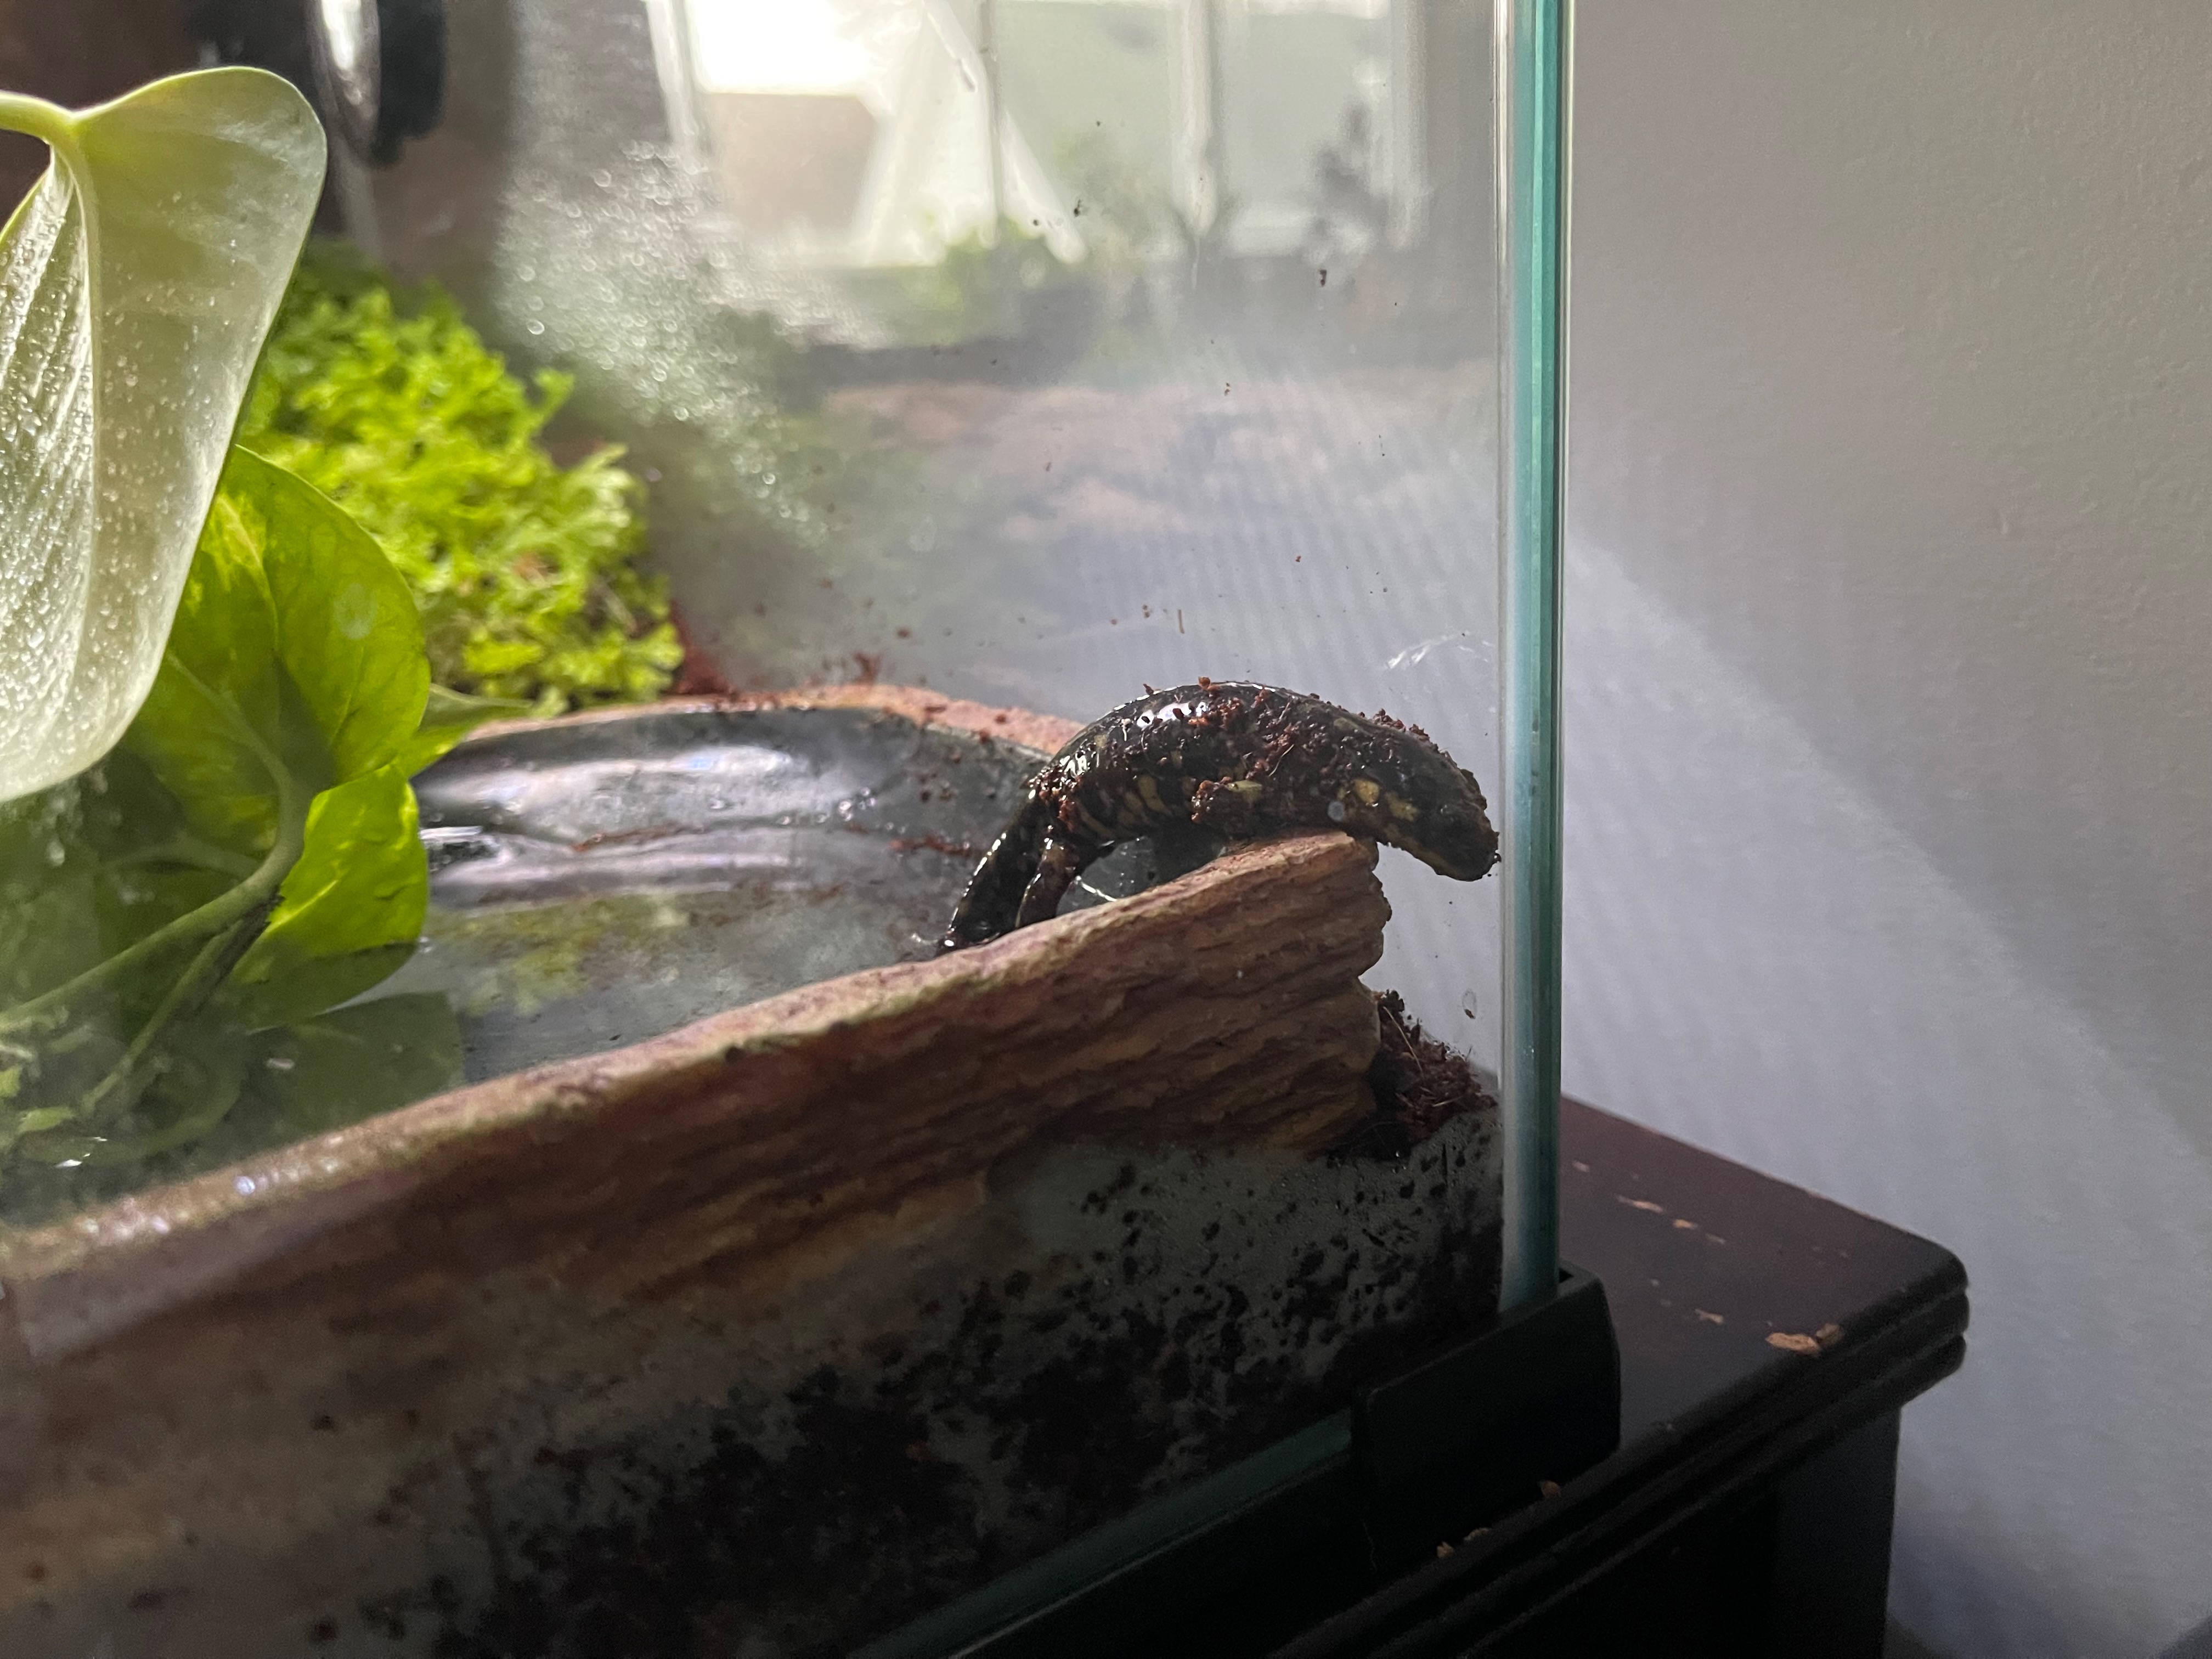 Our pet salamander: Corn